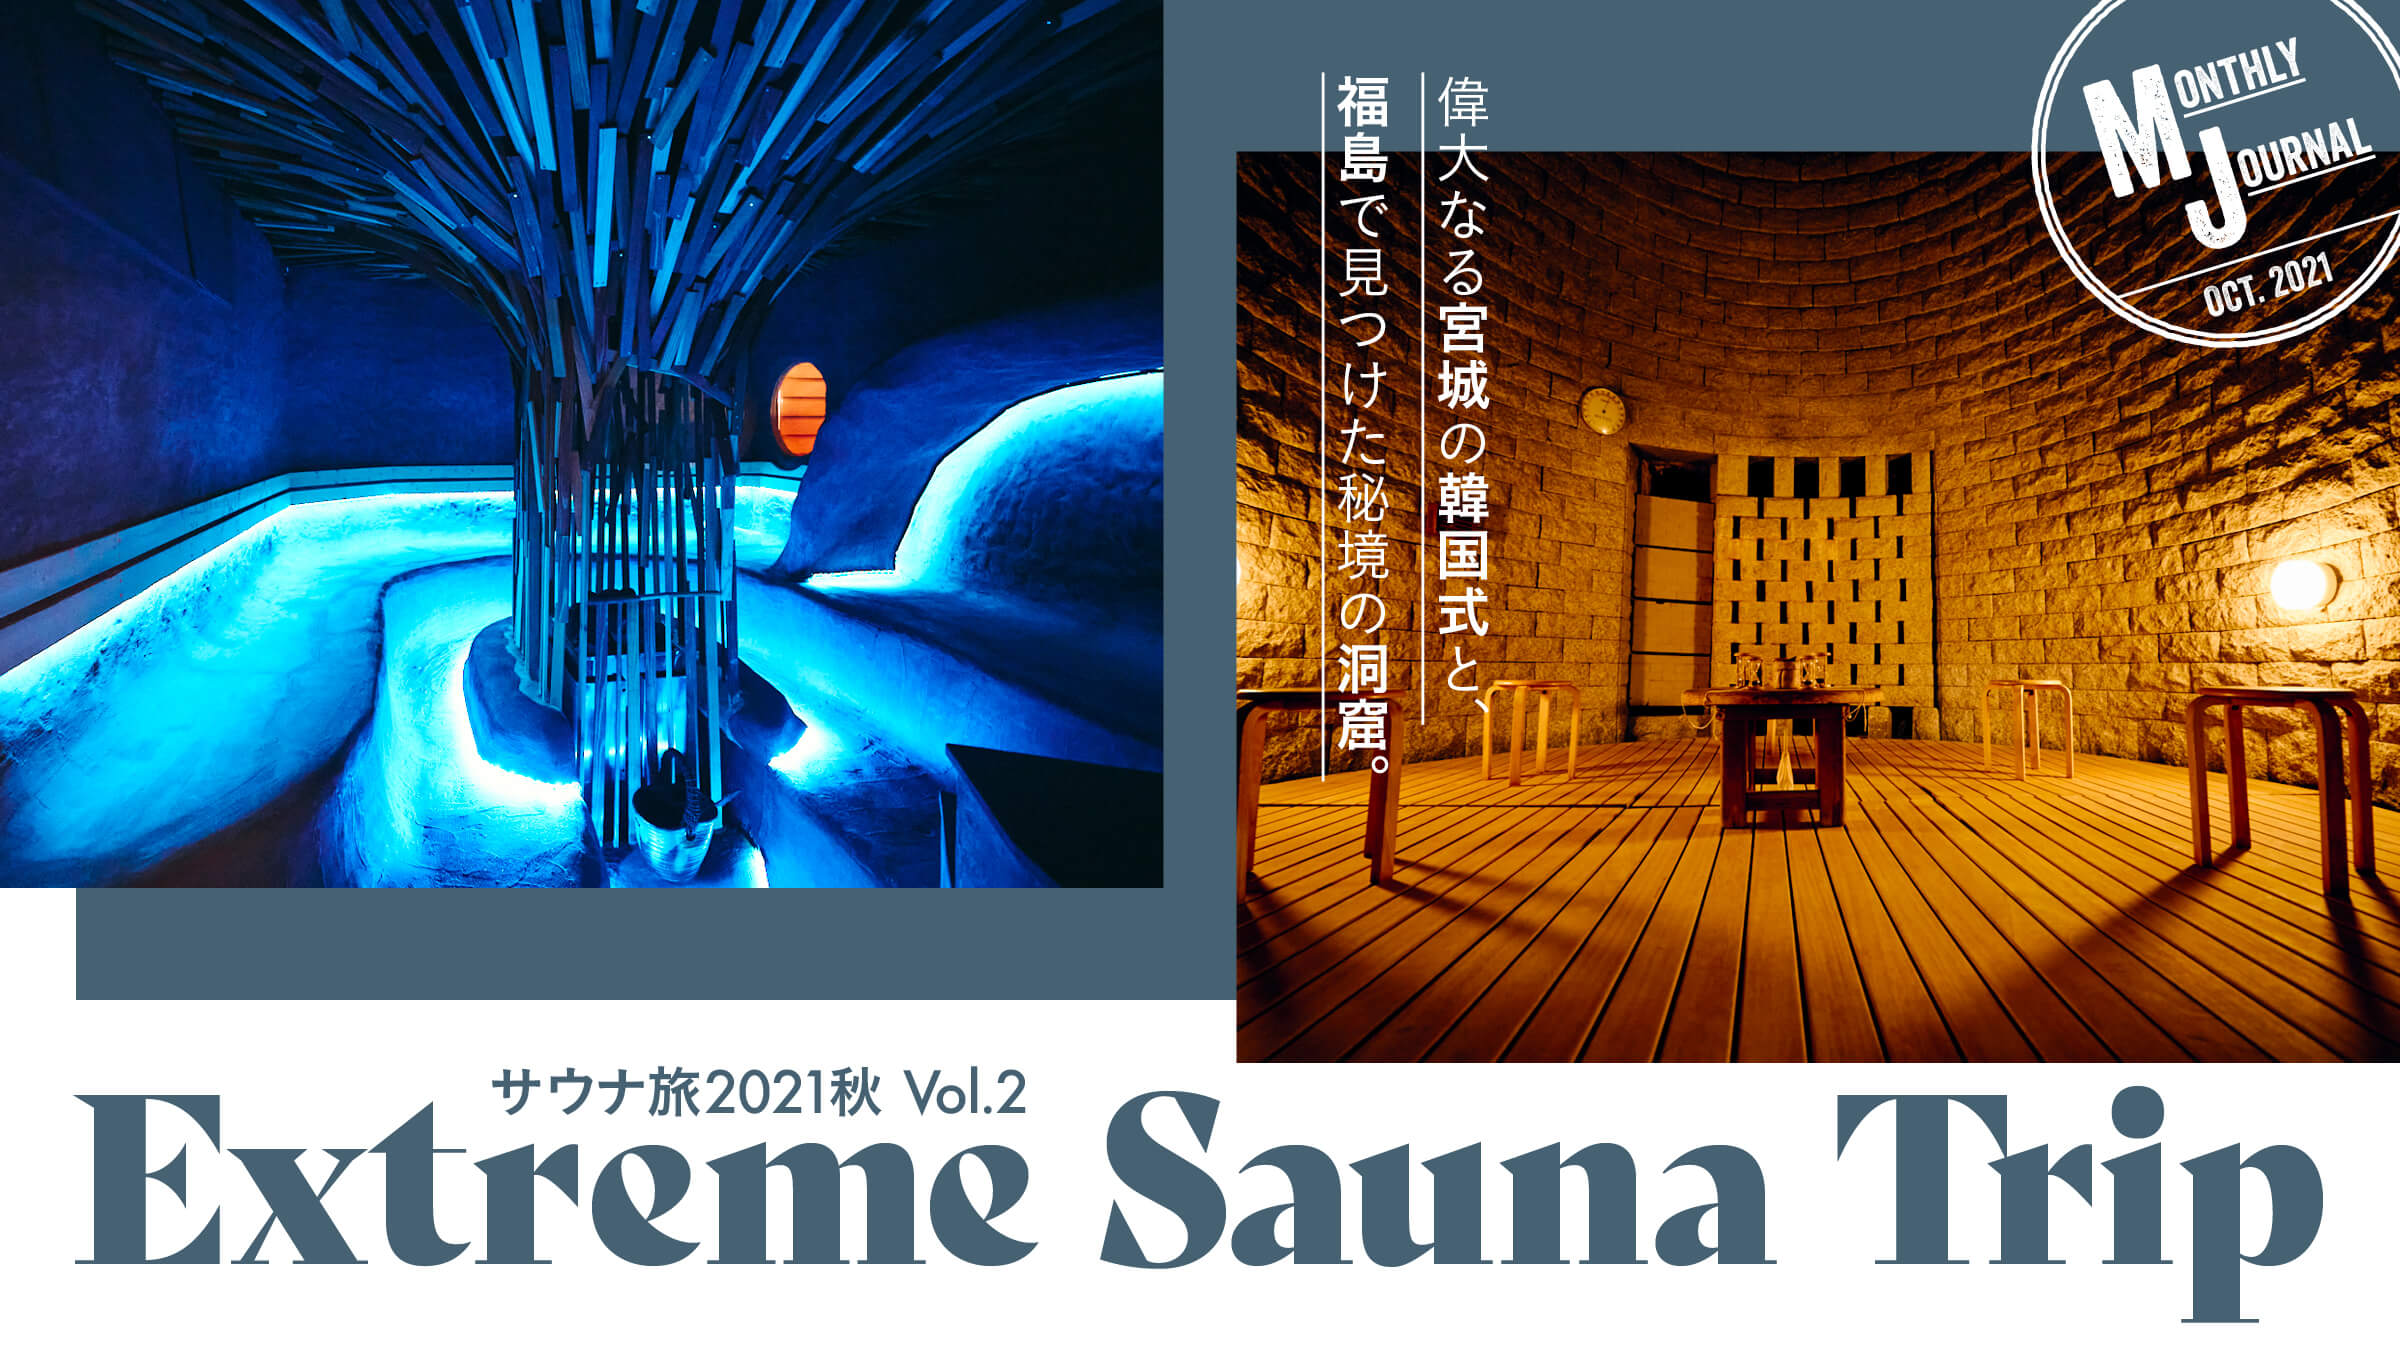 Extreme Sauna Trip 偉大なる宮城の韓国式と、福島で見つけた秘境の洞窟。サウナ旅2021秋 Vol.2